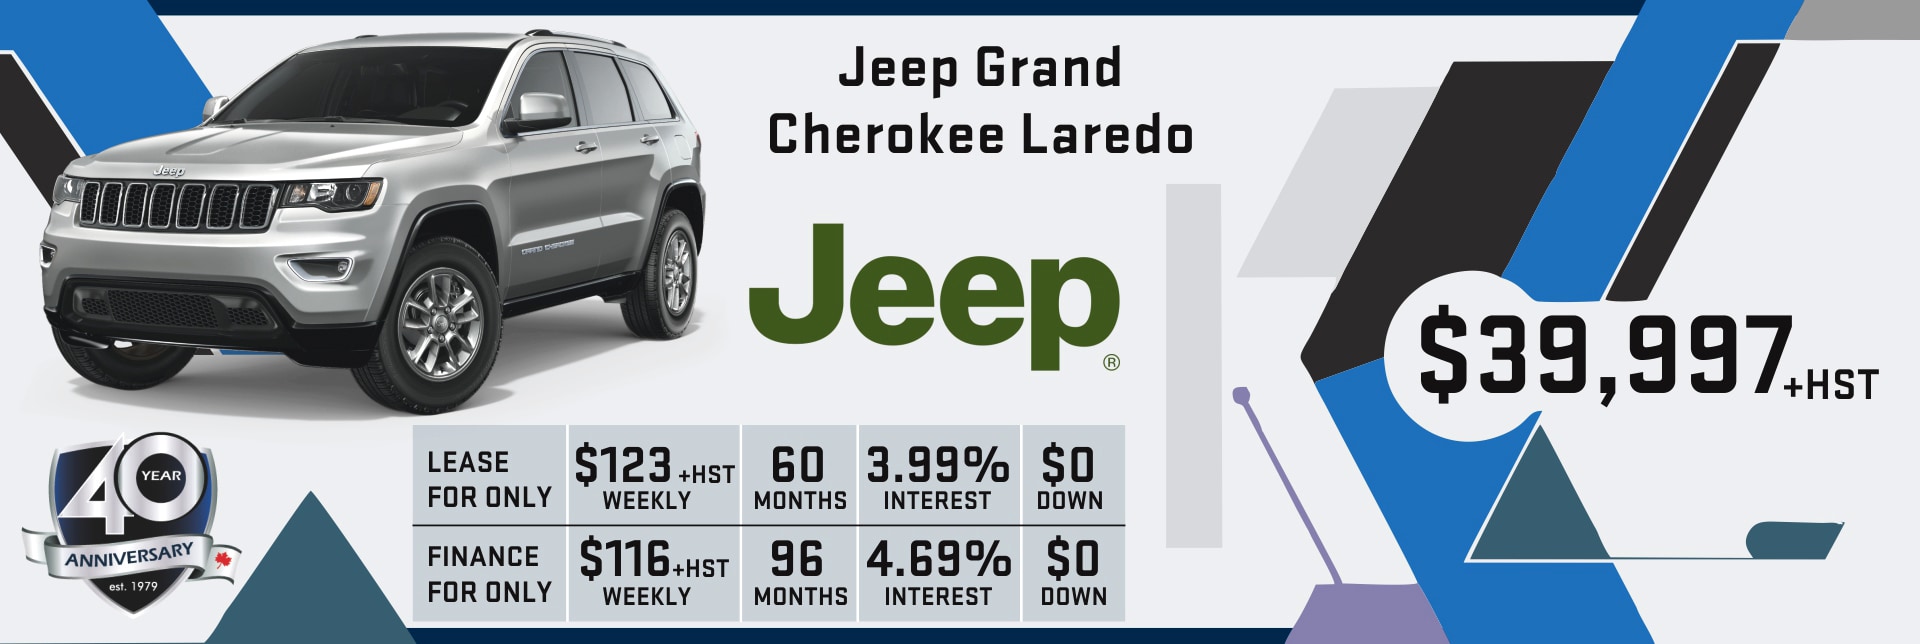 jeep invoice pricing